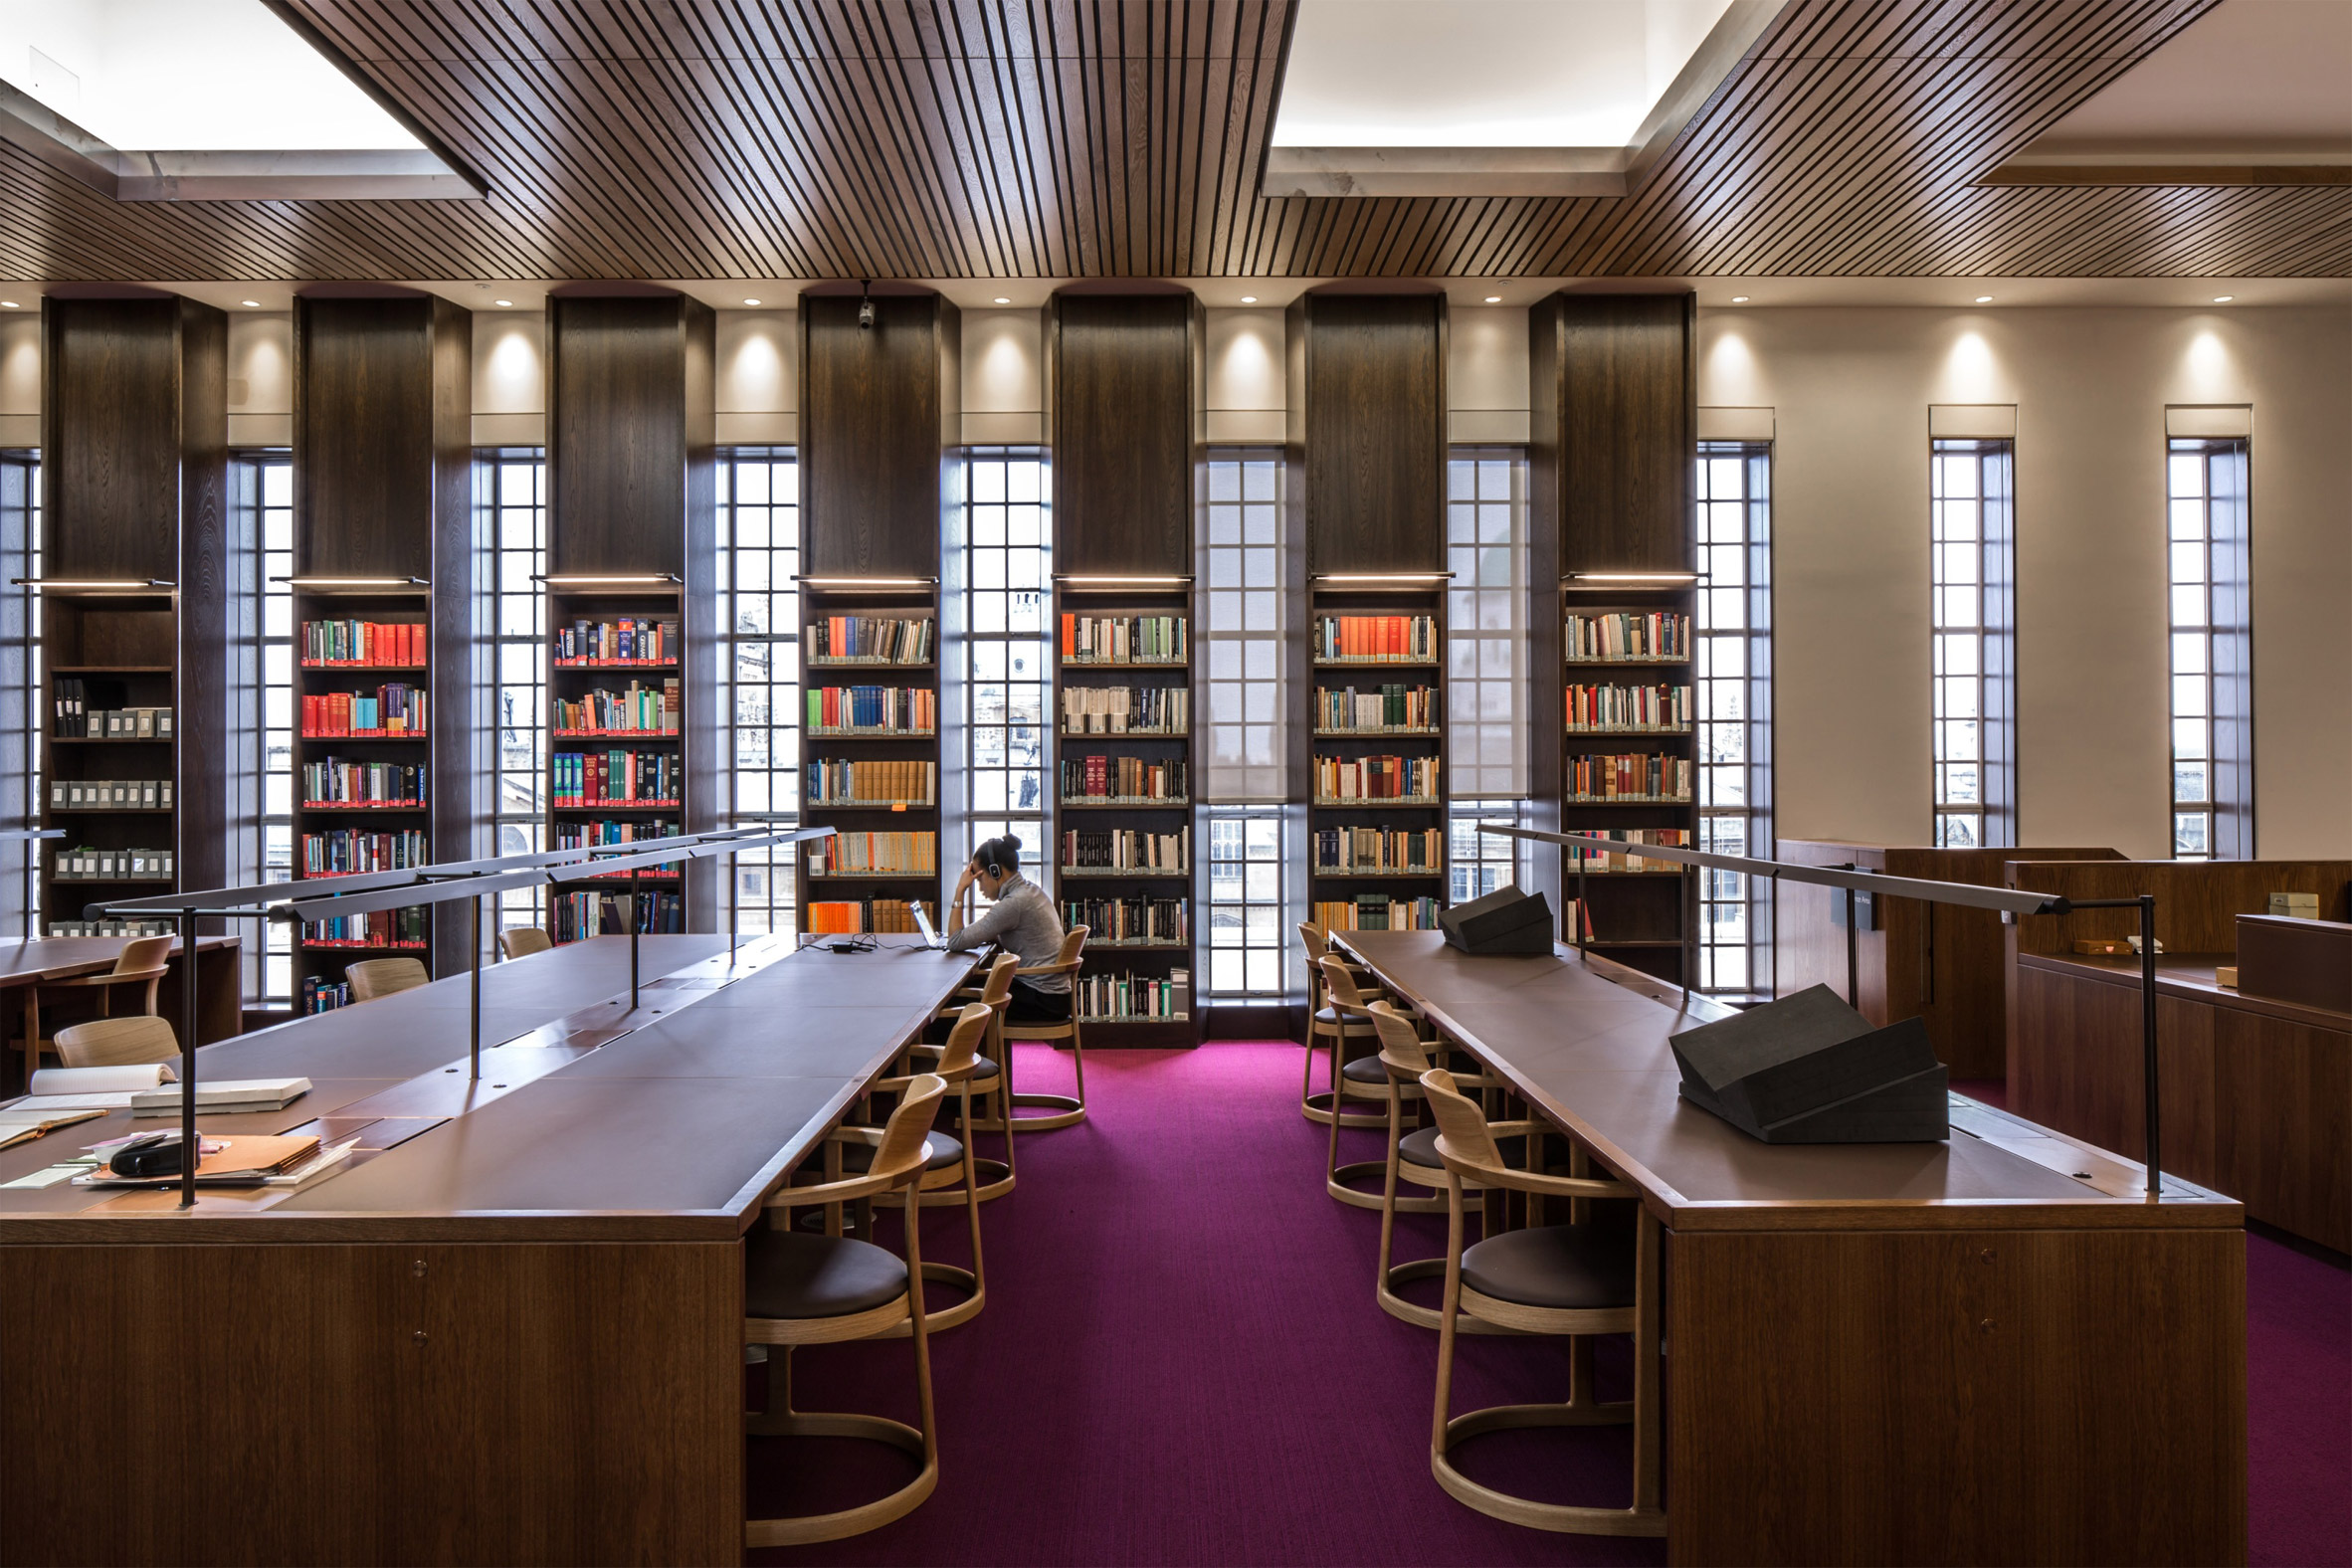 weston-library-wilkinson-eyre-architecture-education-university-of-oxford-uk_dezeen_2364_col_16